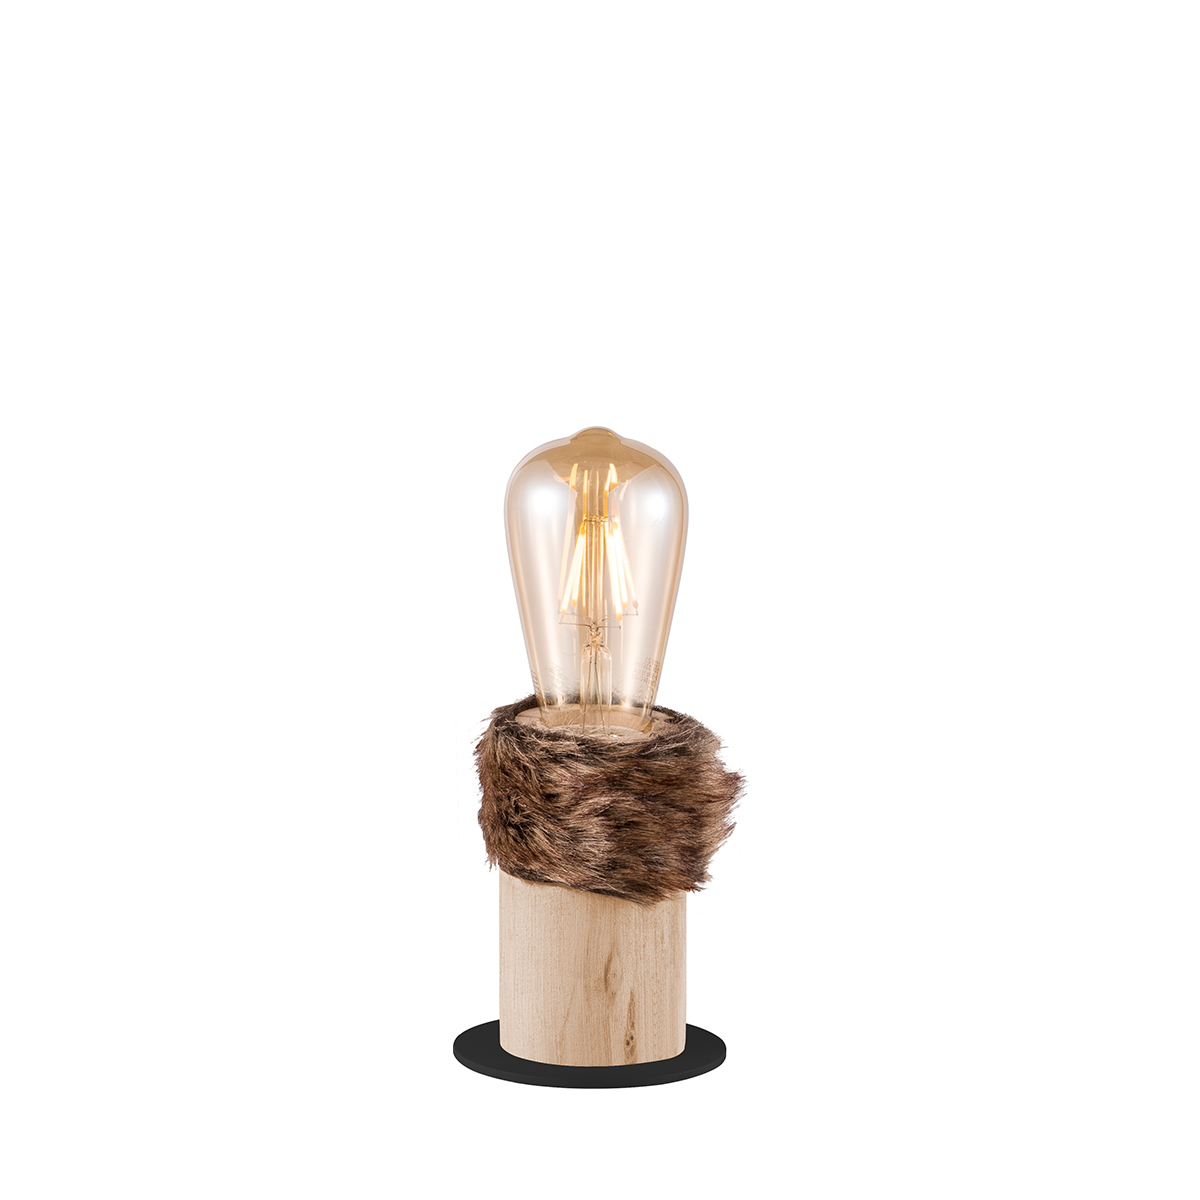 Tangla lighting - TLT1090-01SB - Table lamp 1 Light - metal + FSC wood + fur - sand black + natural - standard - E27